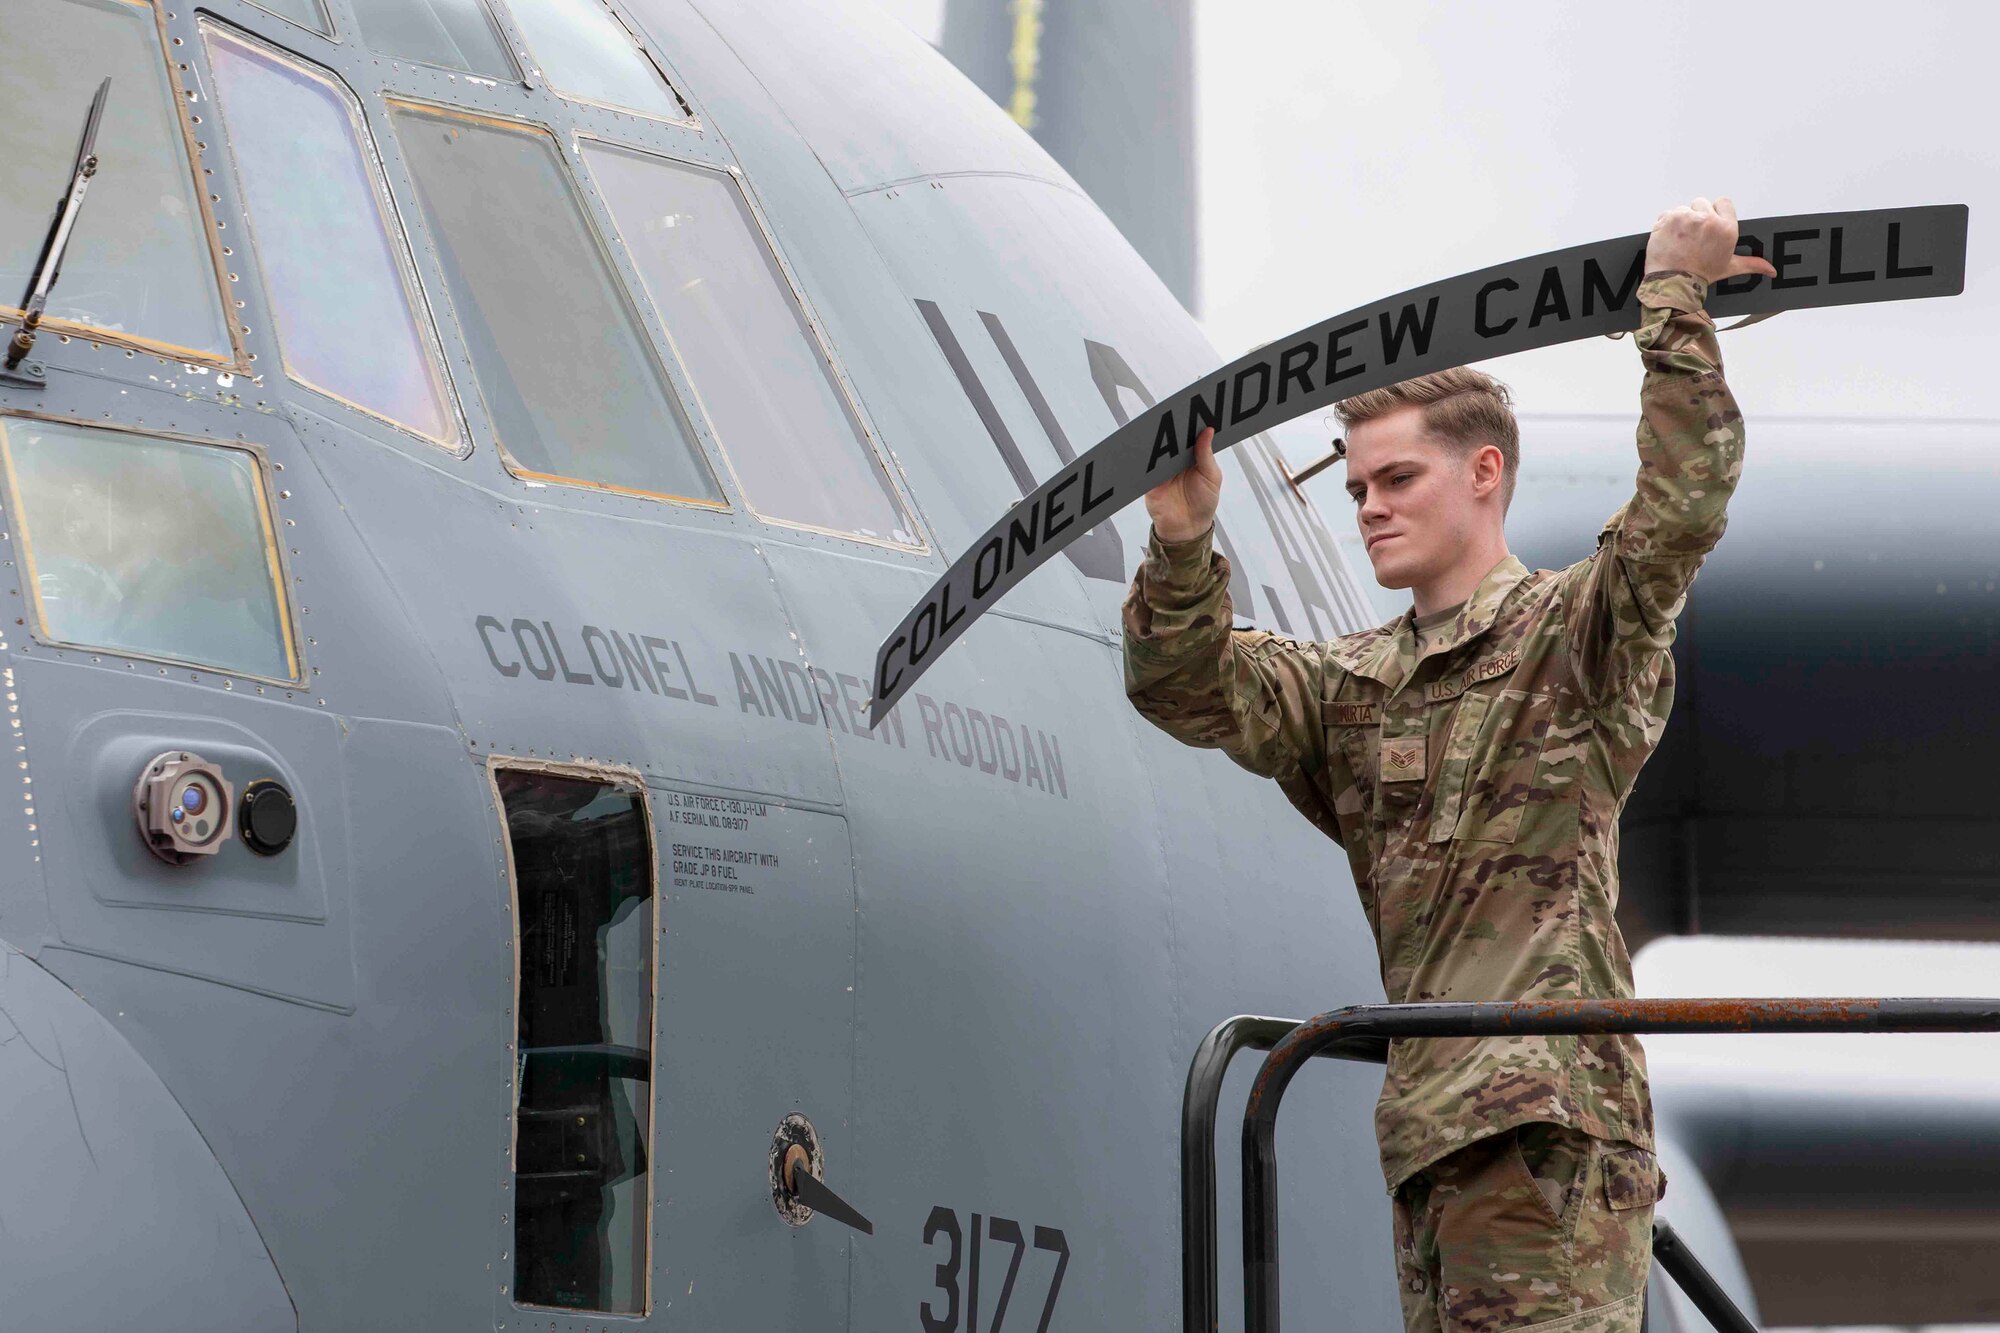 A U.S. Air Force Airman unveils a nametape on a C-130J Super Hercules